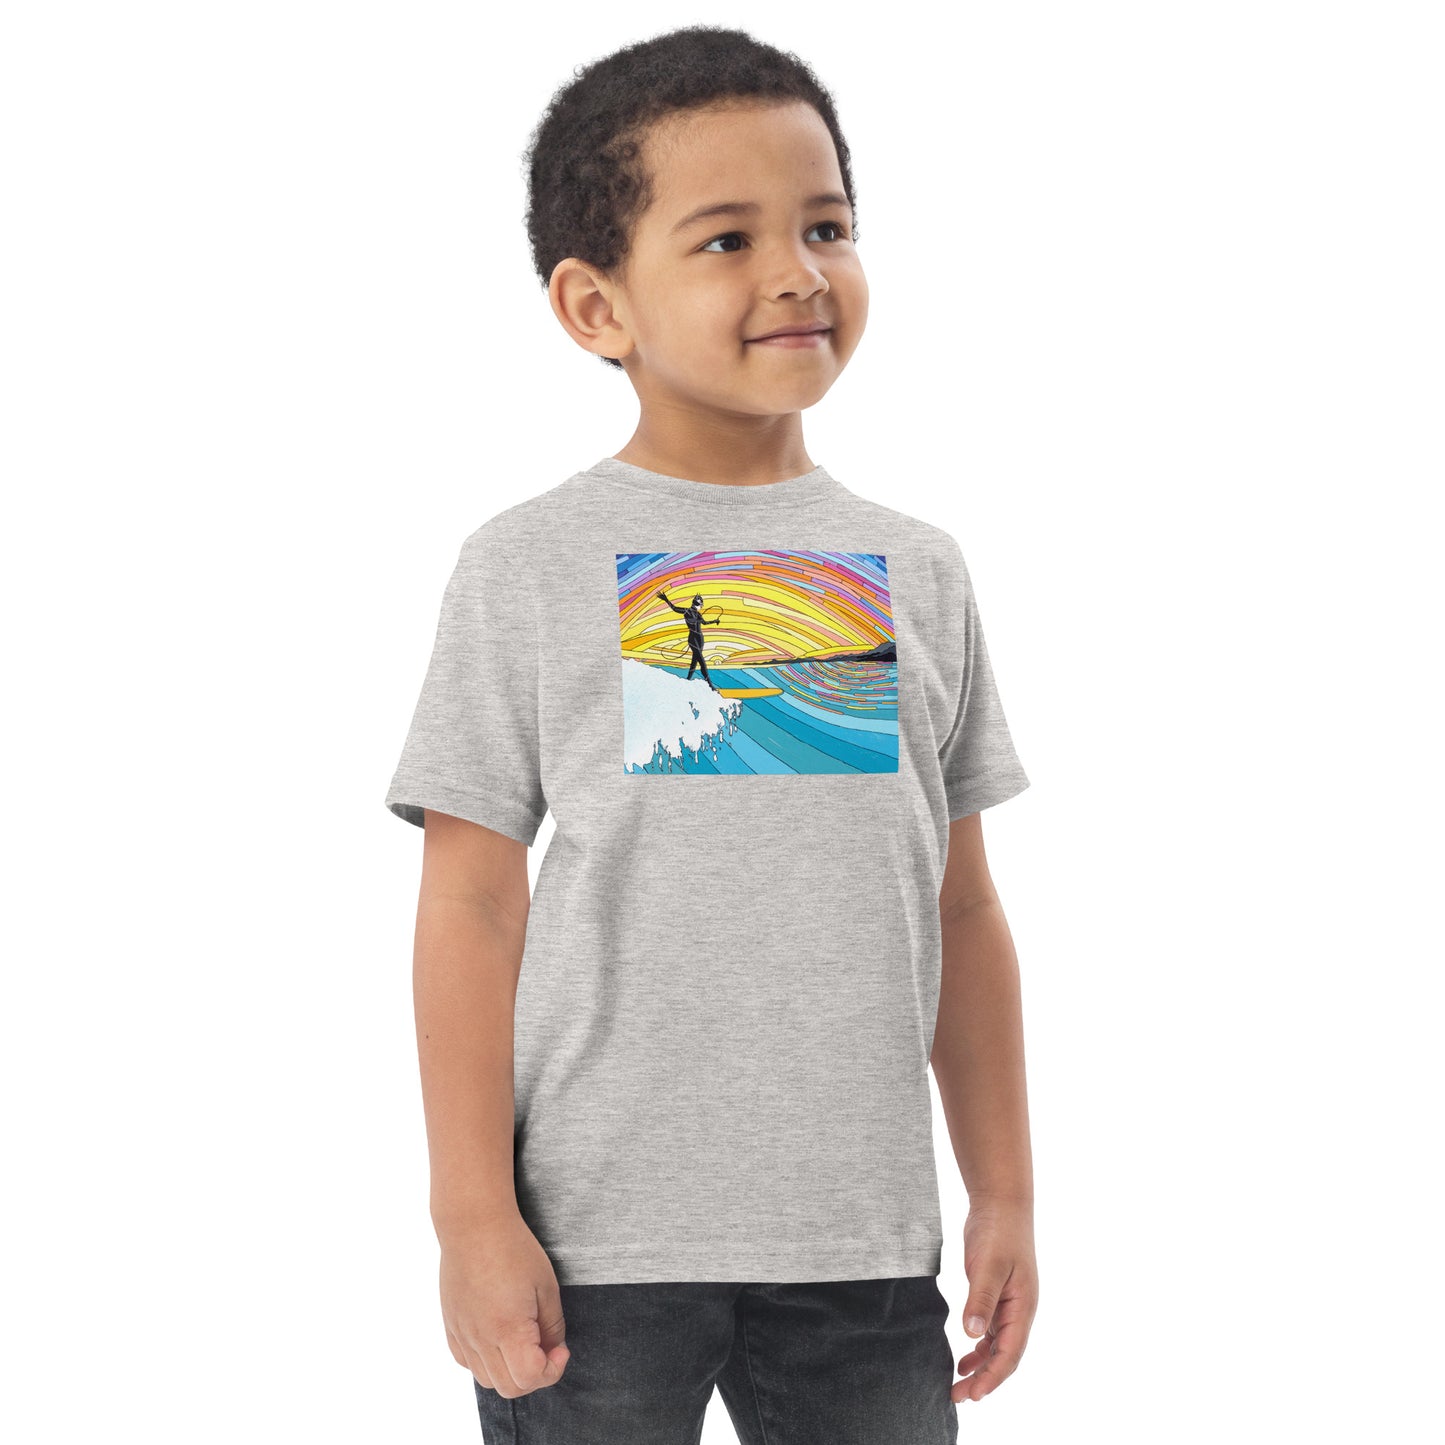 Meowie Wowie Toddler jersey t-shirt